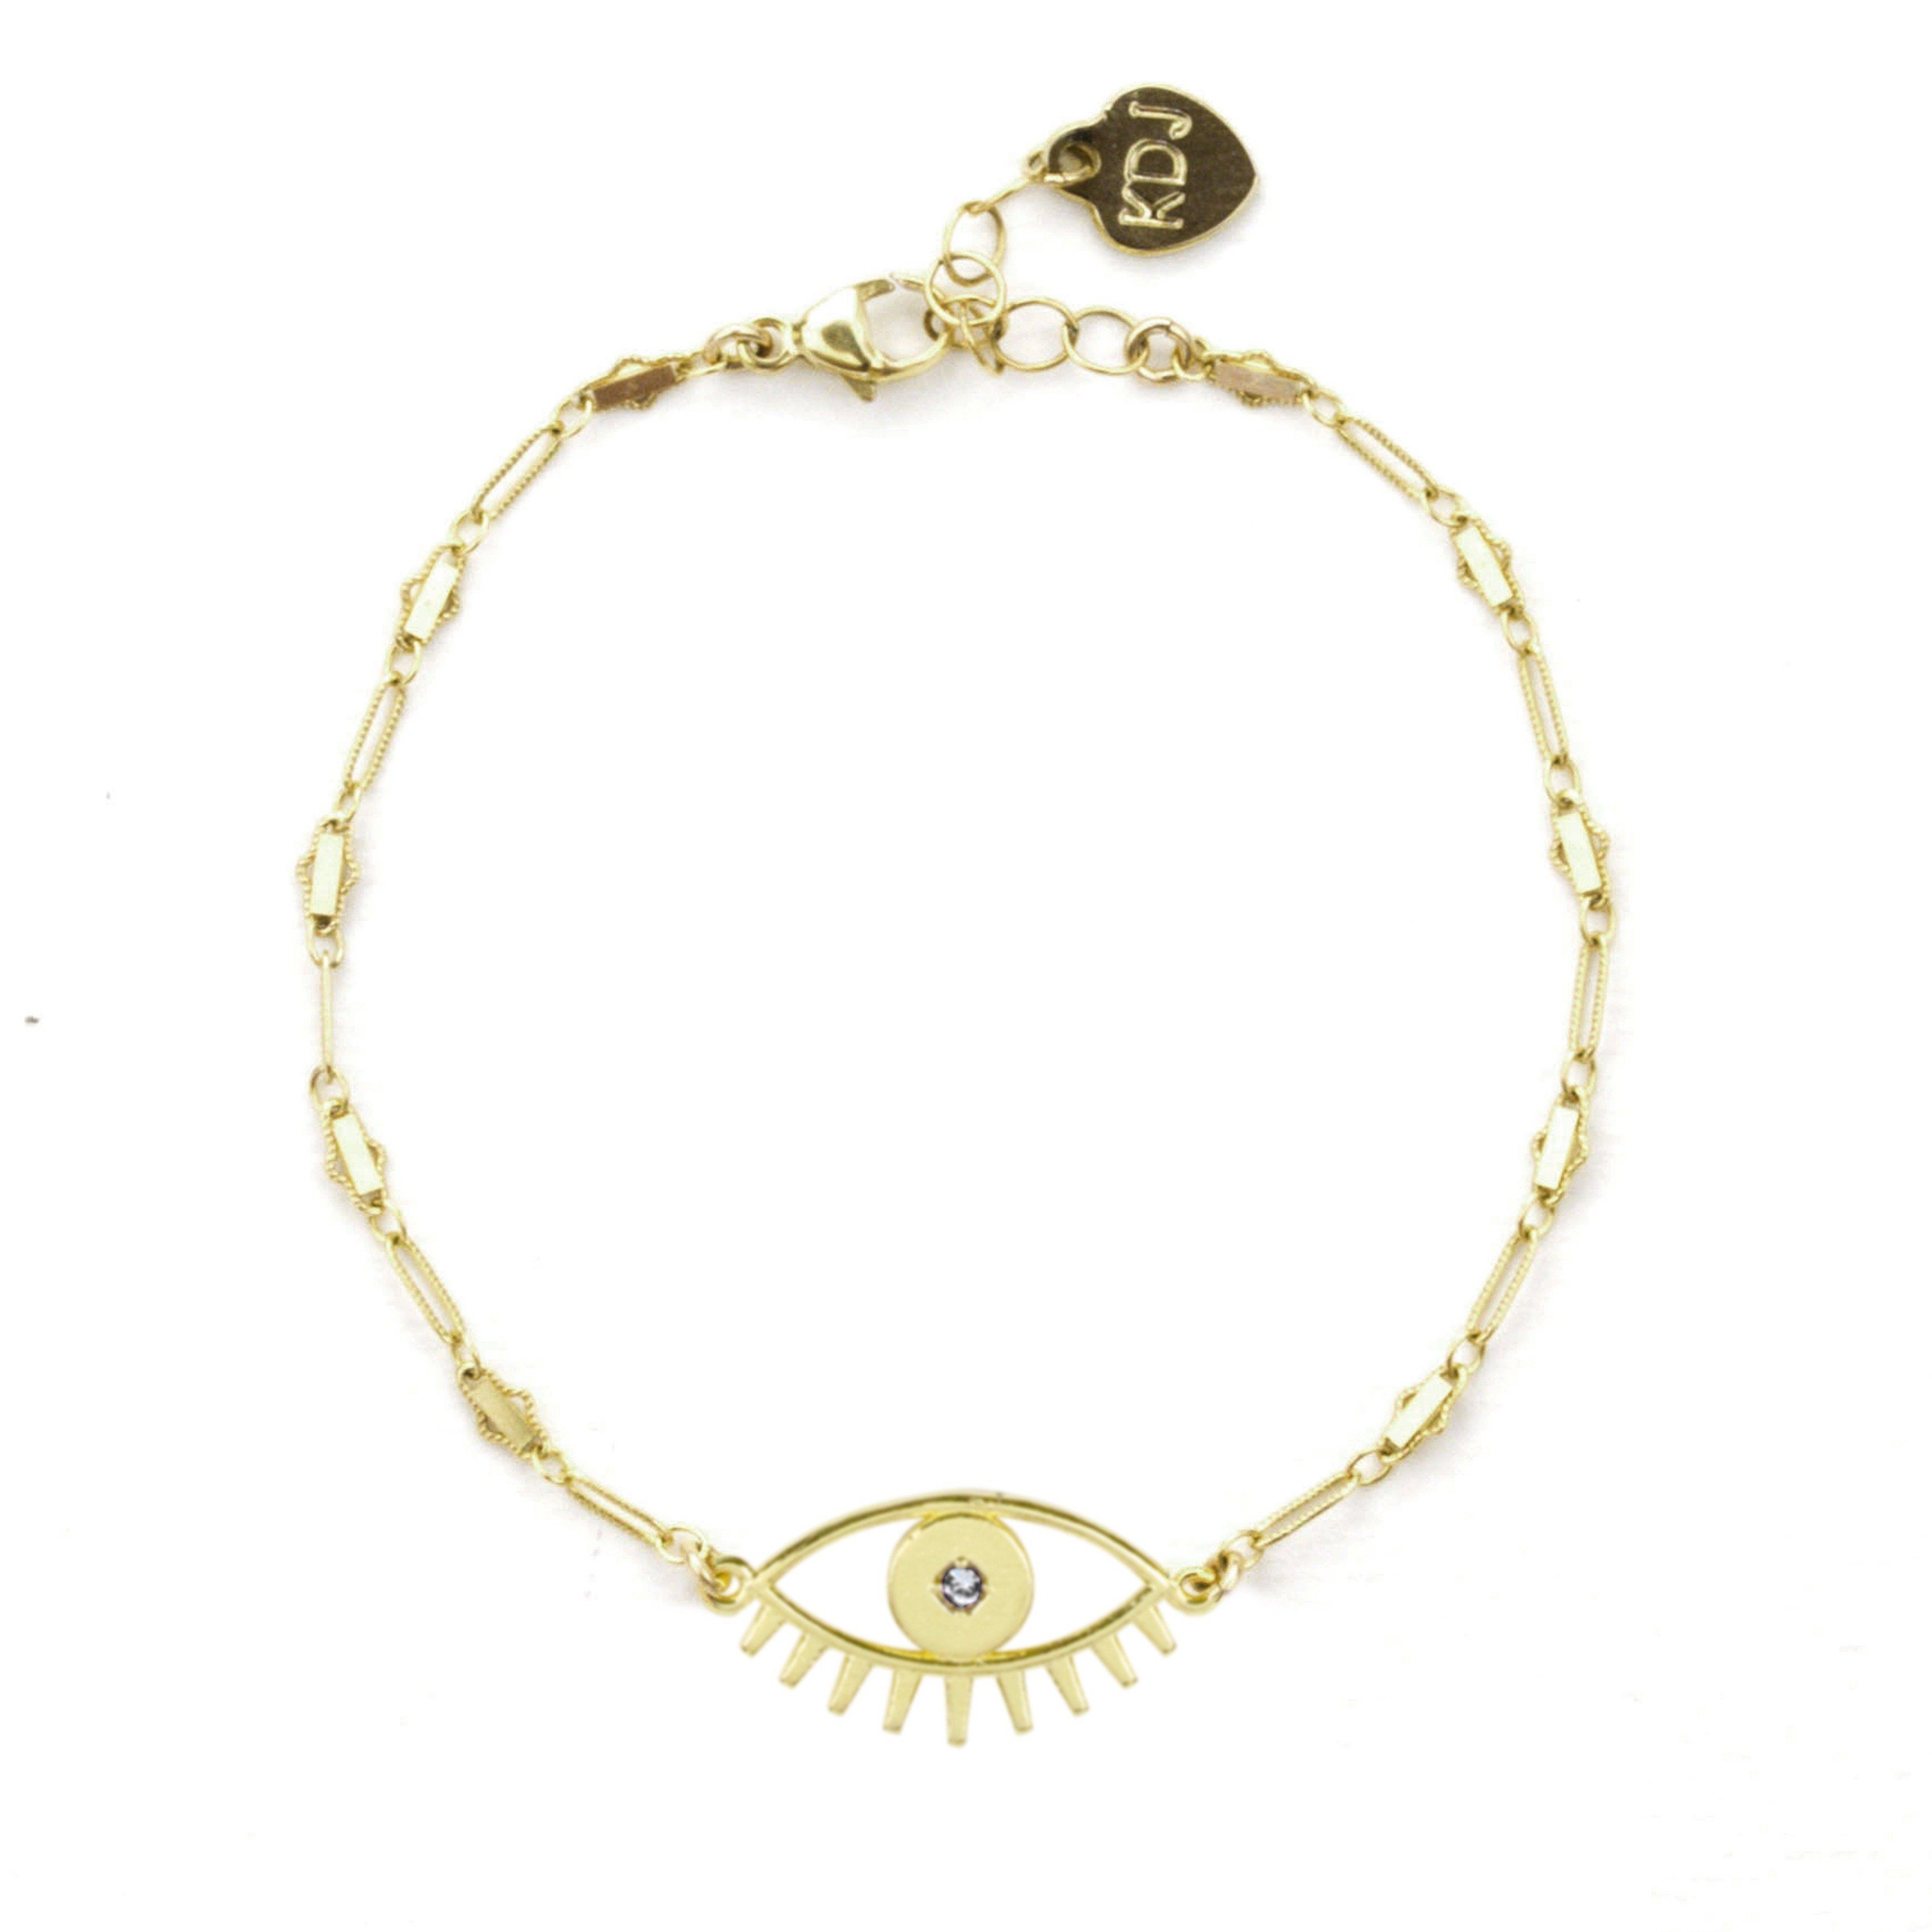 Gold Evil Eye Bracelet shown on a white background, by Katie Dean Jewelry.